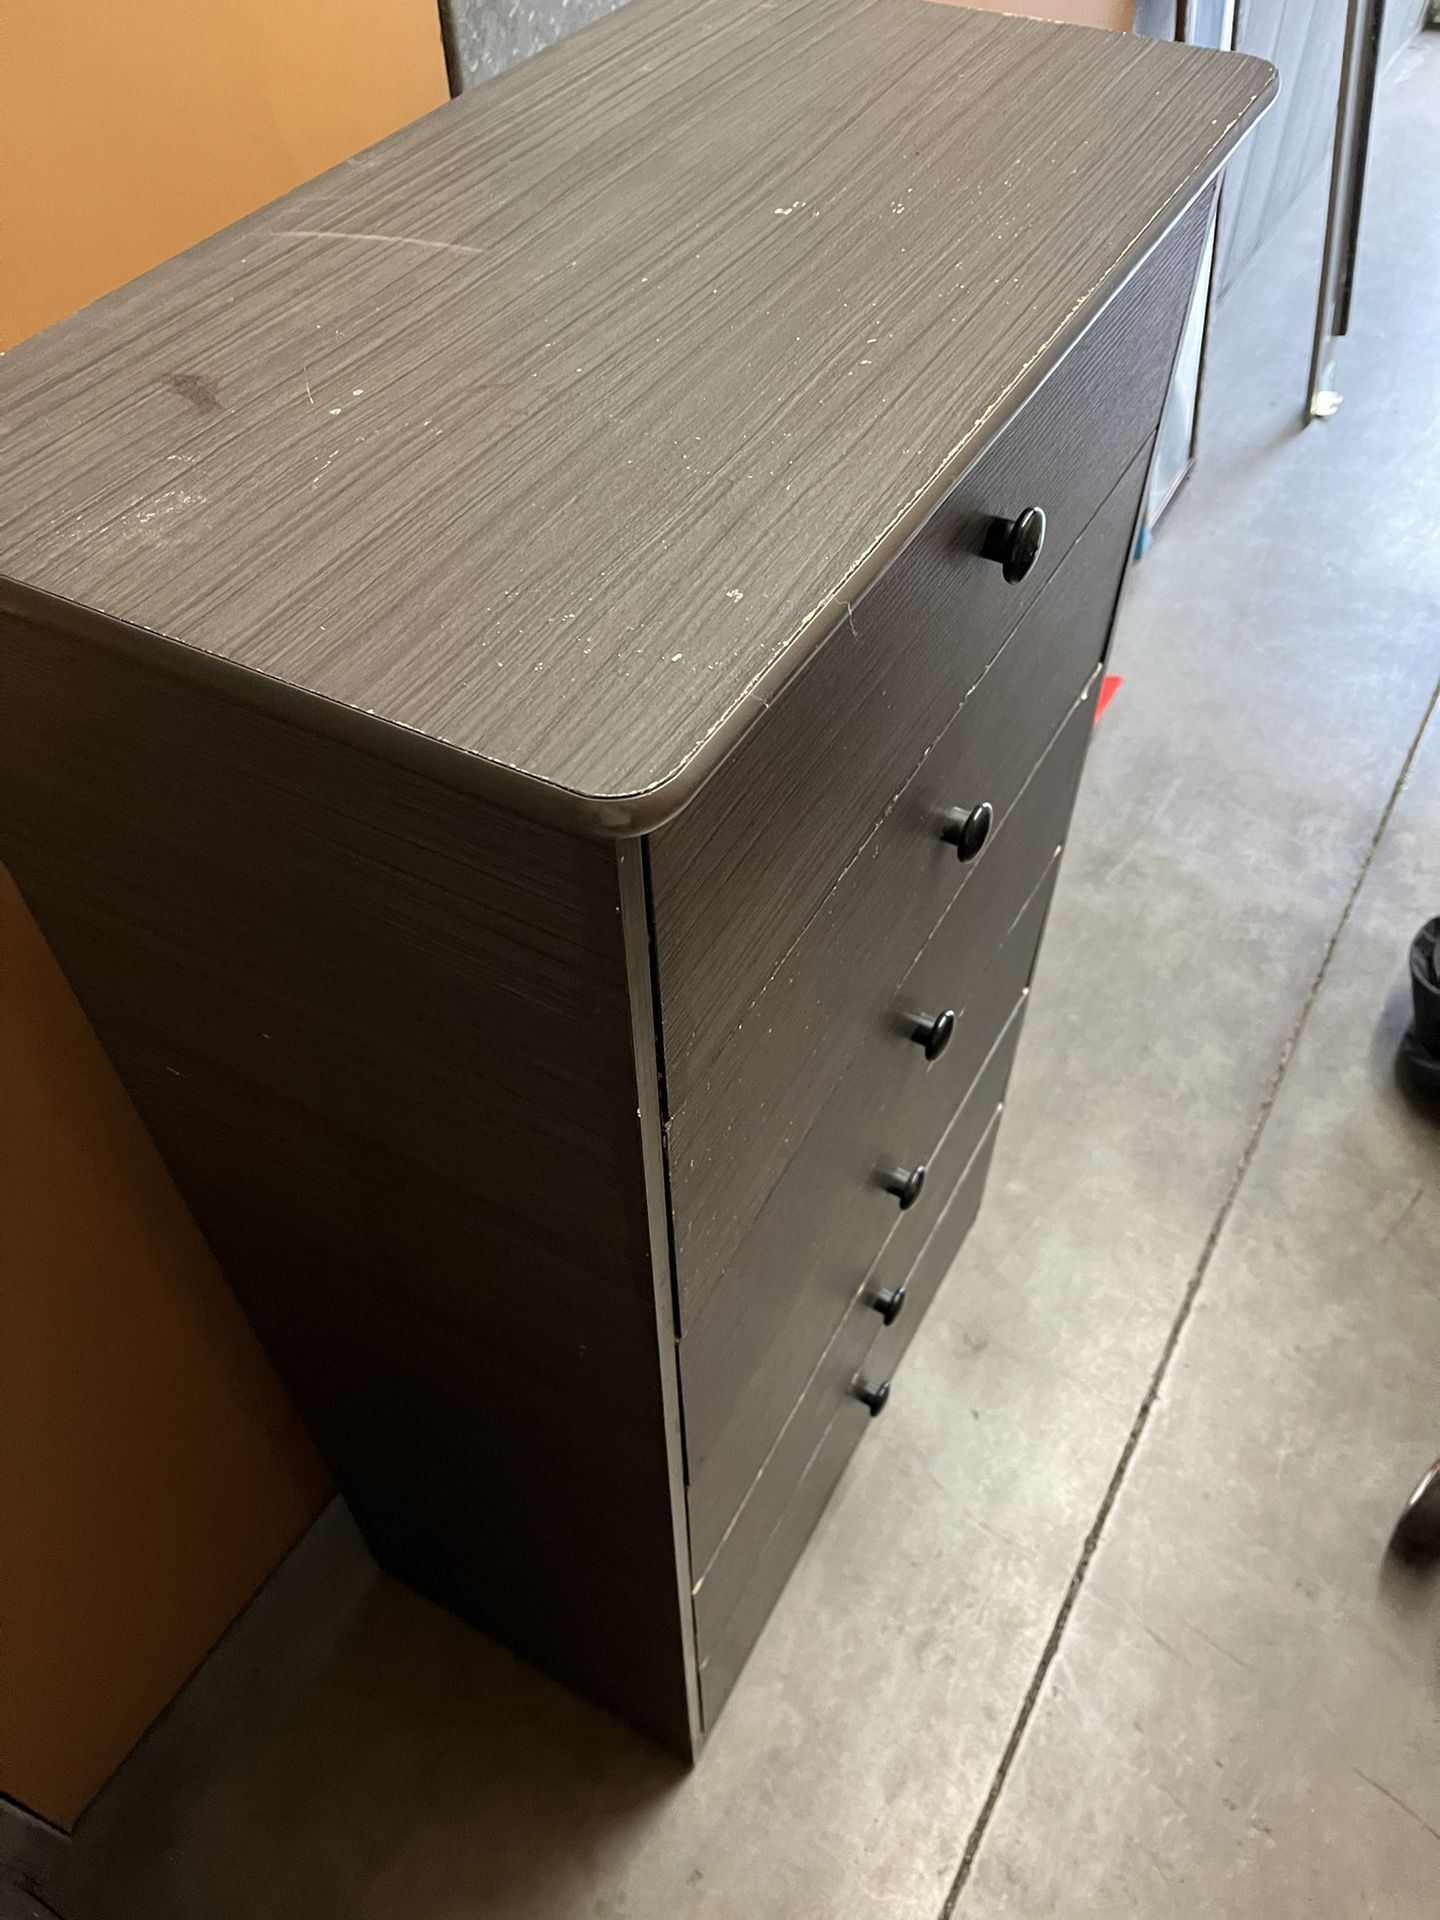 Grey 6 Drawer Dresser 